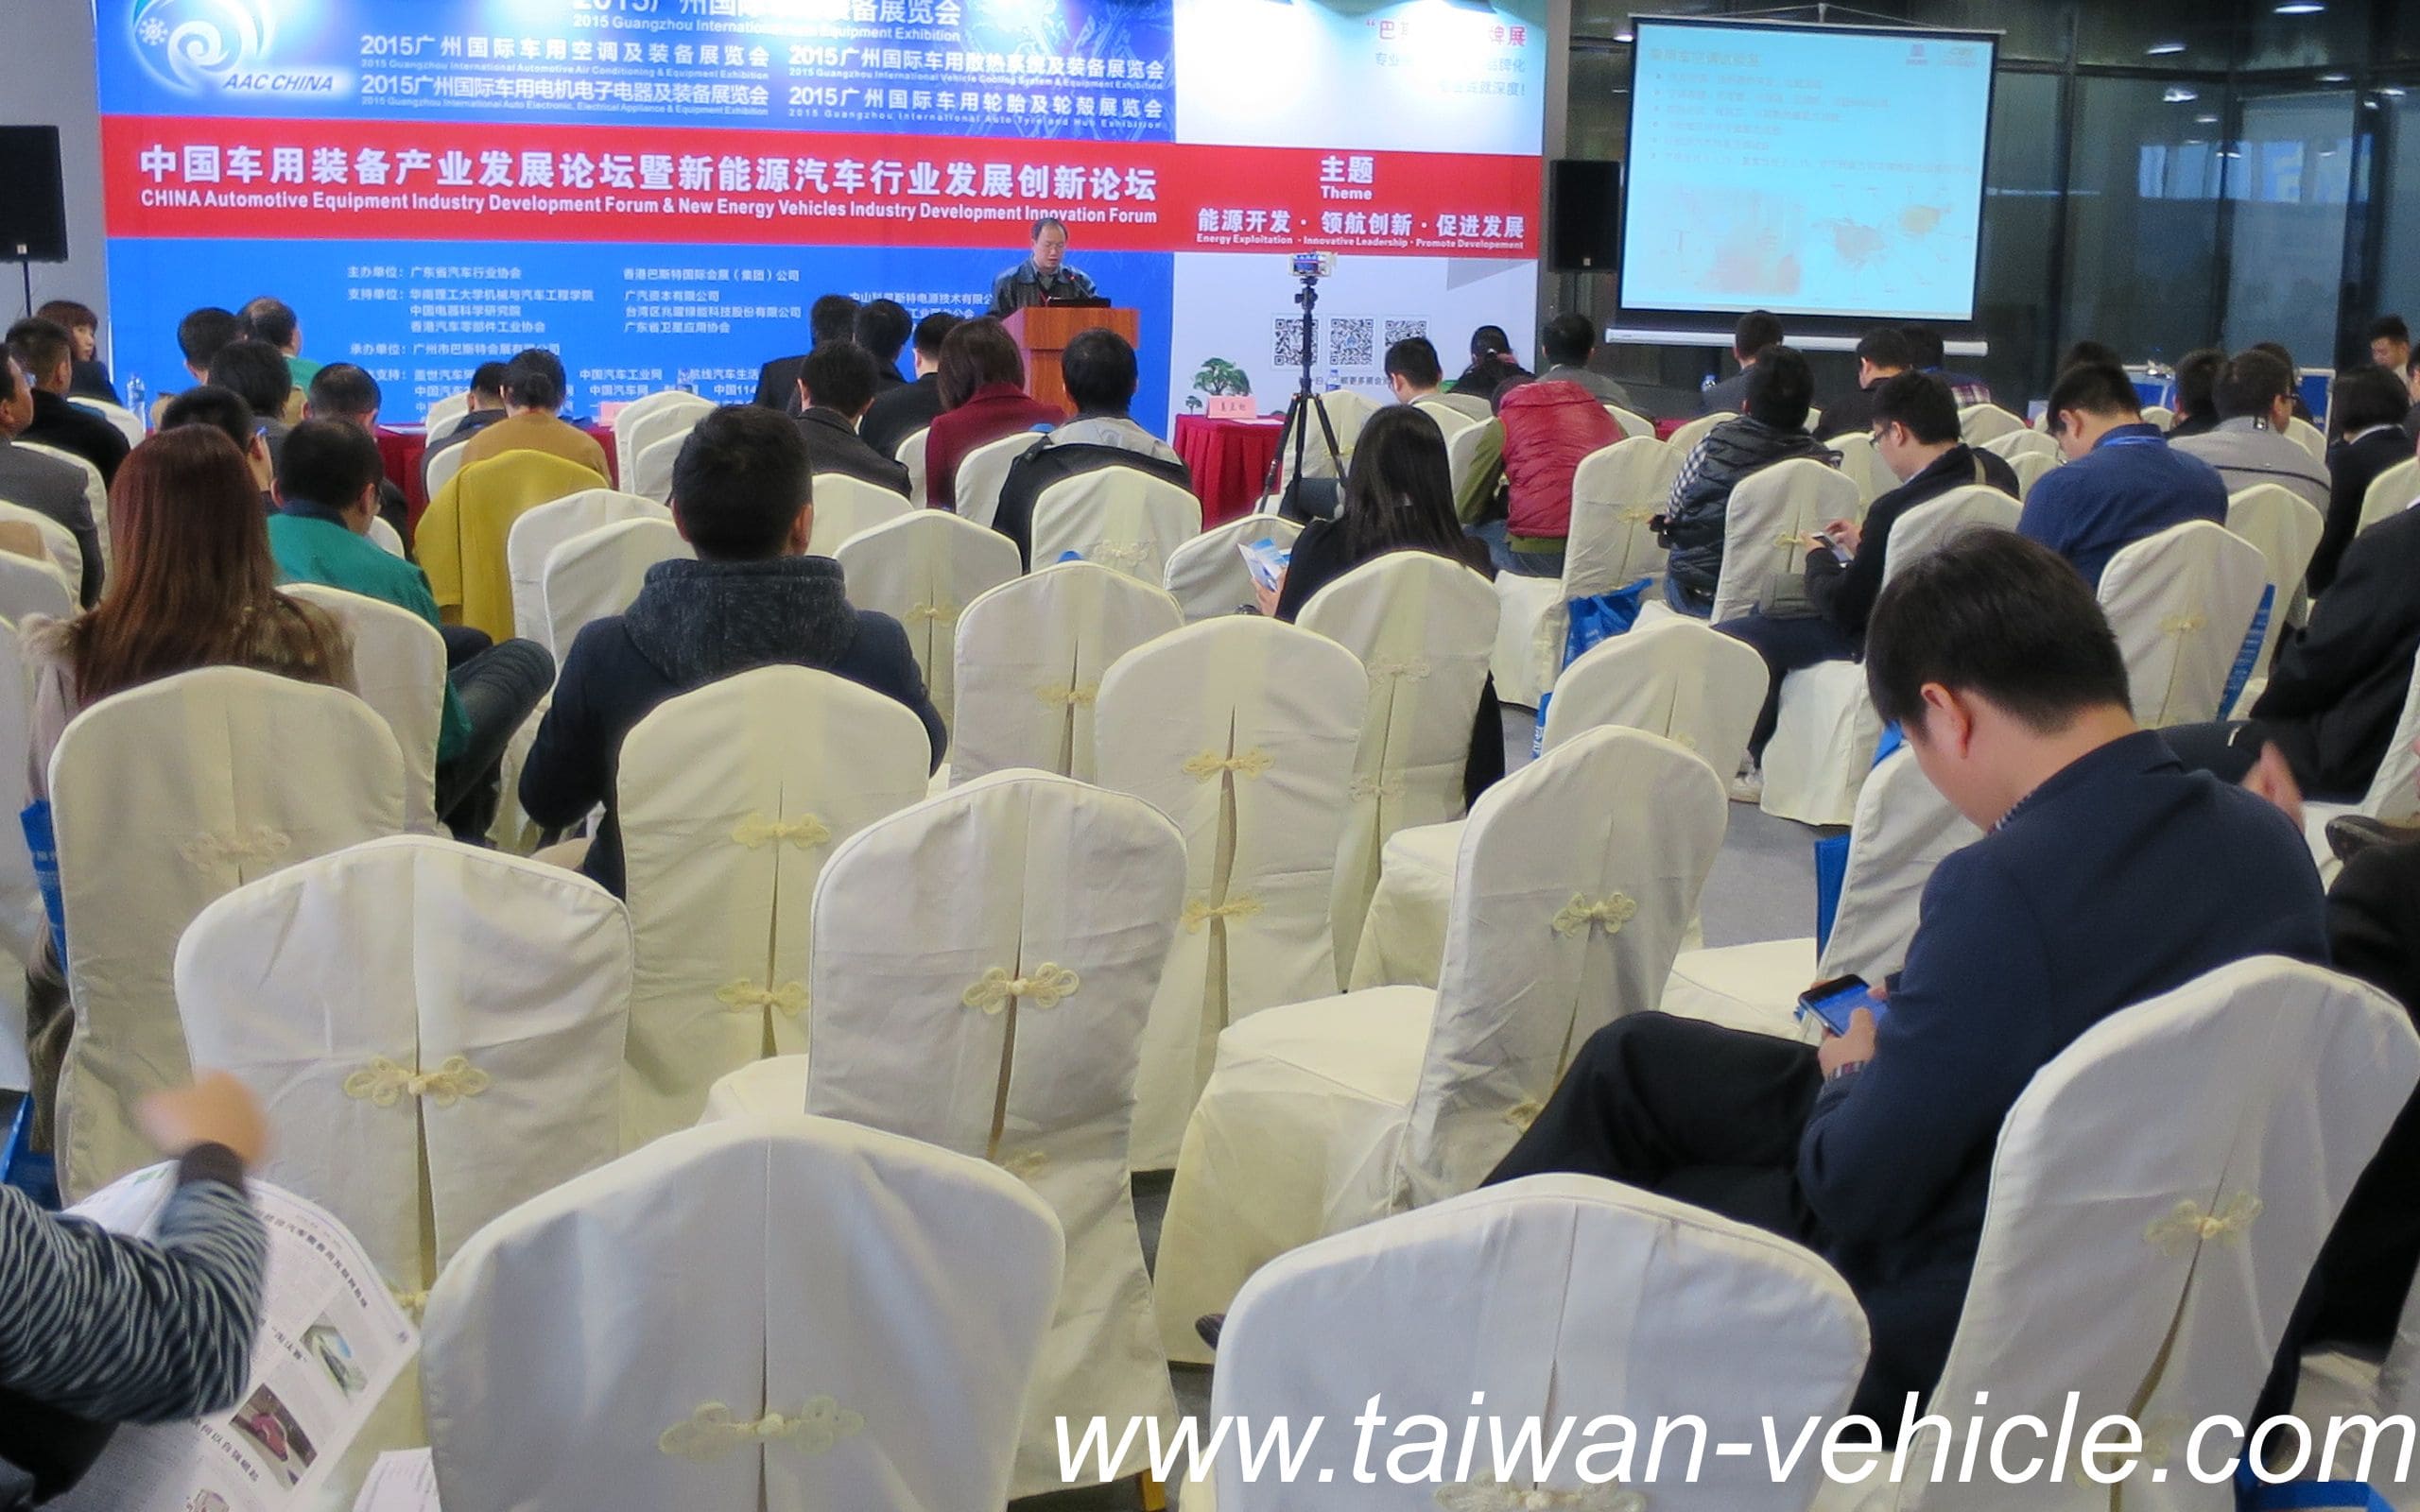 Guangzhou International Automotive Air-conditioning & Eqiupment Exhibition 2015